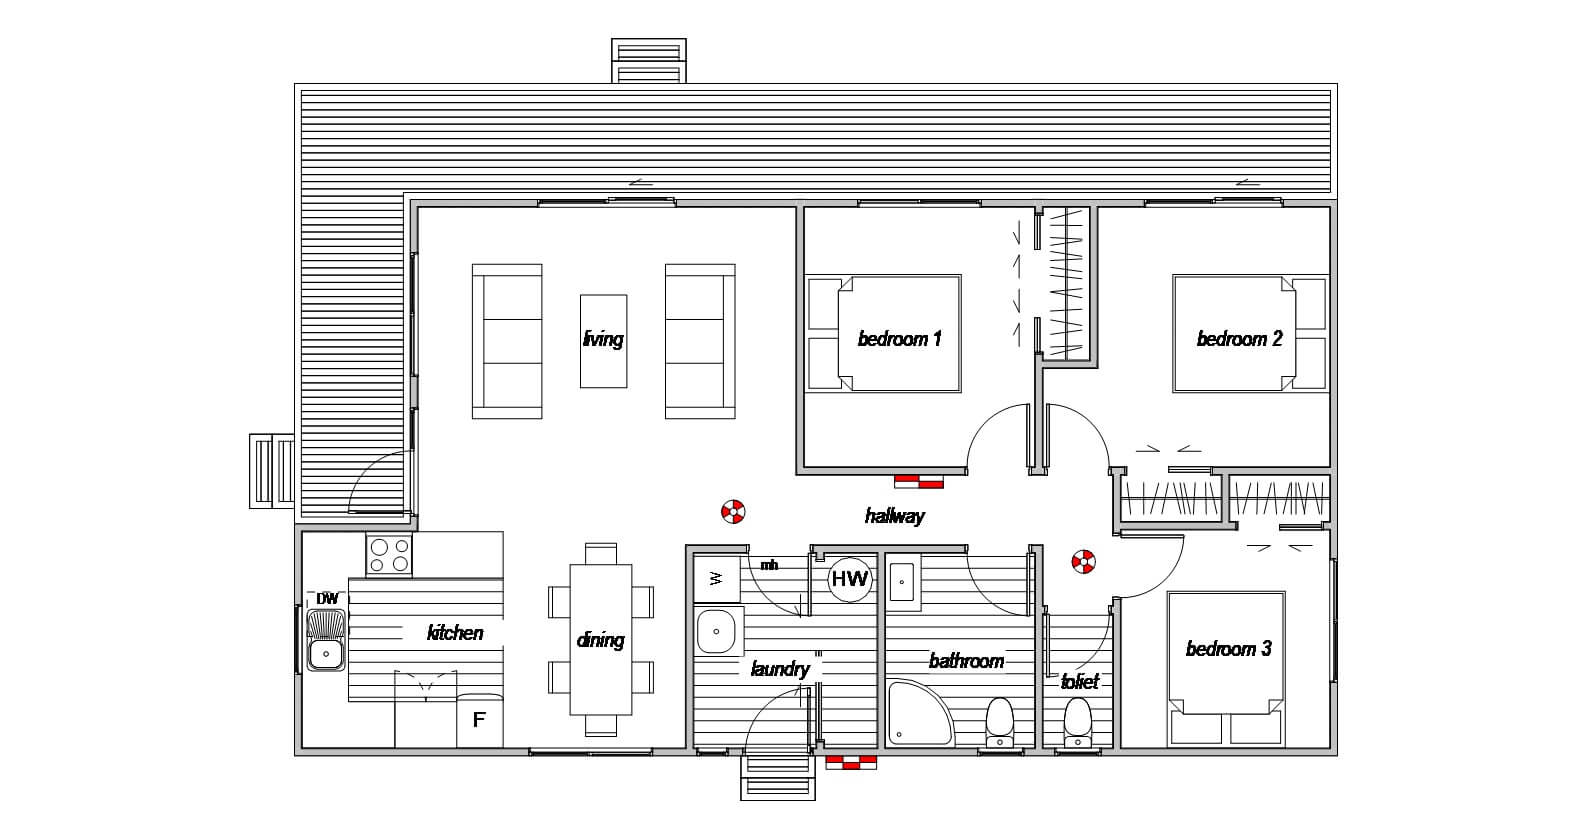 3 Bedroom design - Villa 3 prefab home floor plan